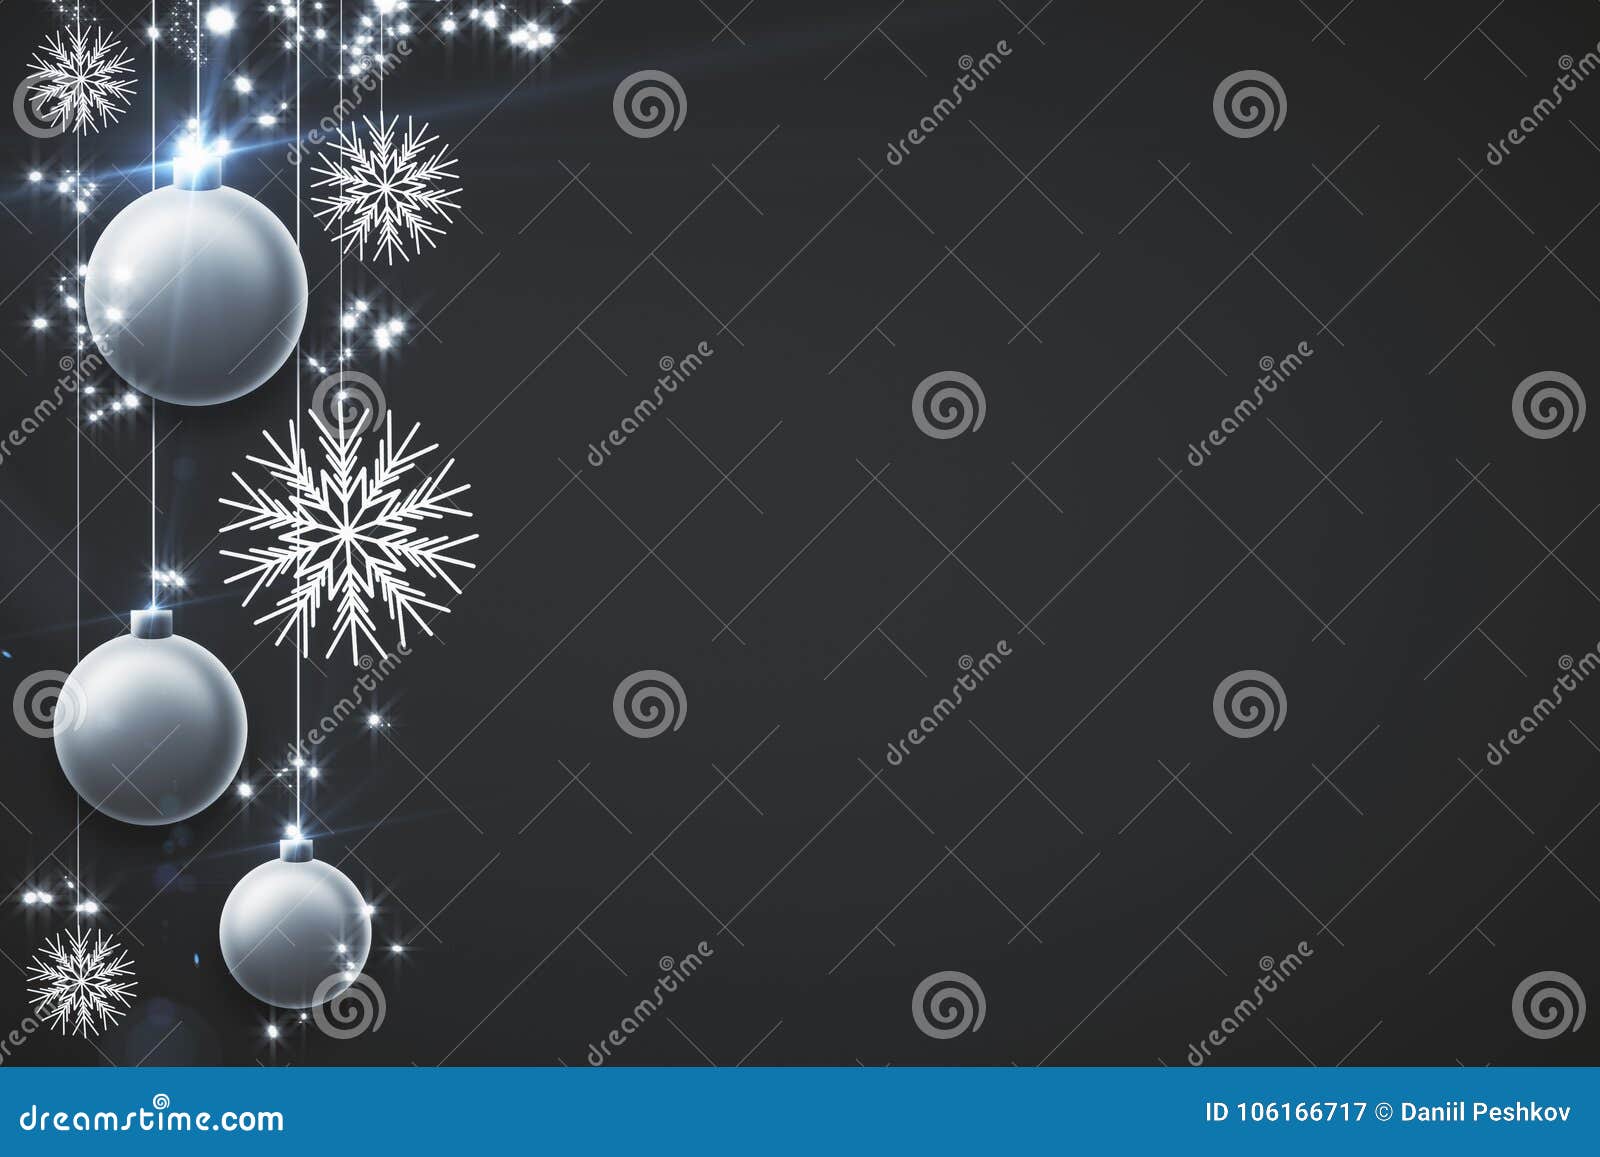 Creative Black Xmas Wallpaper Stock Illustration - Illustration of bauble,  festive: 106166717